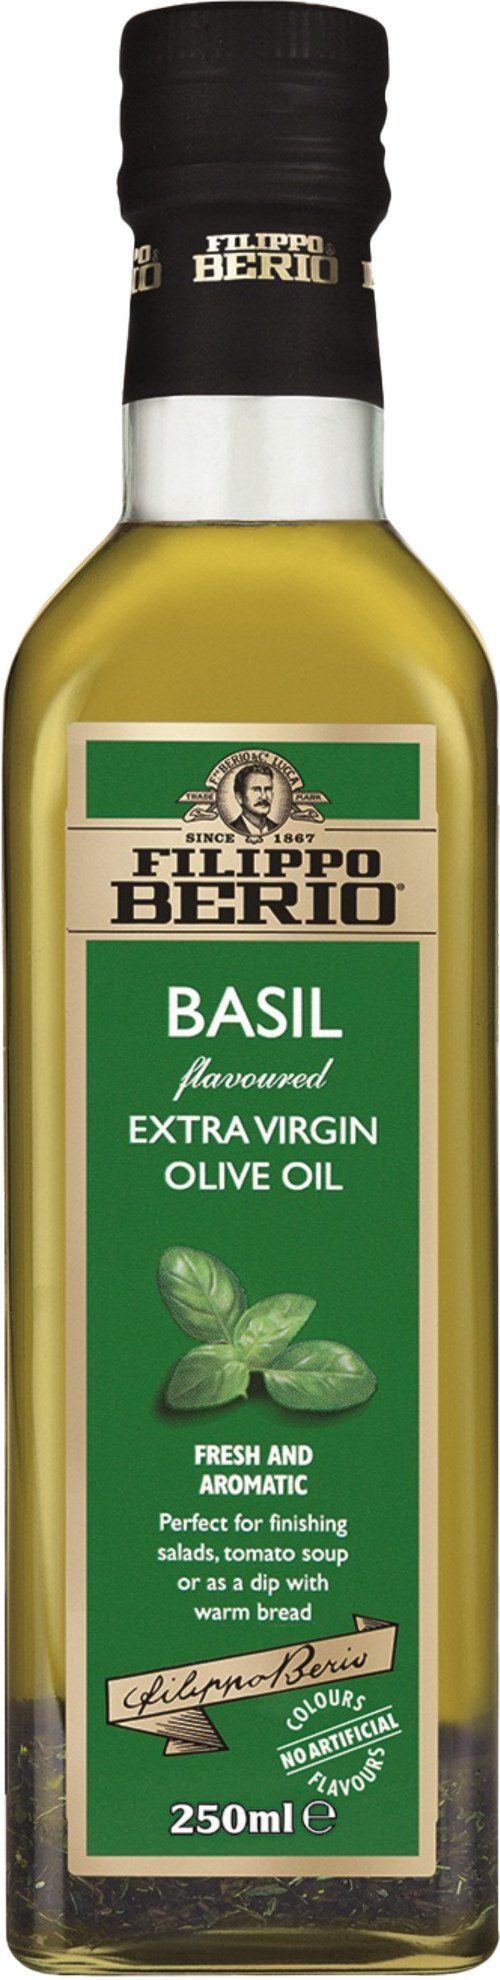 FILIPPO BERIO Extra Virgin Olive Oil - Basil Flavoured 250ml